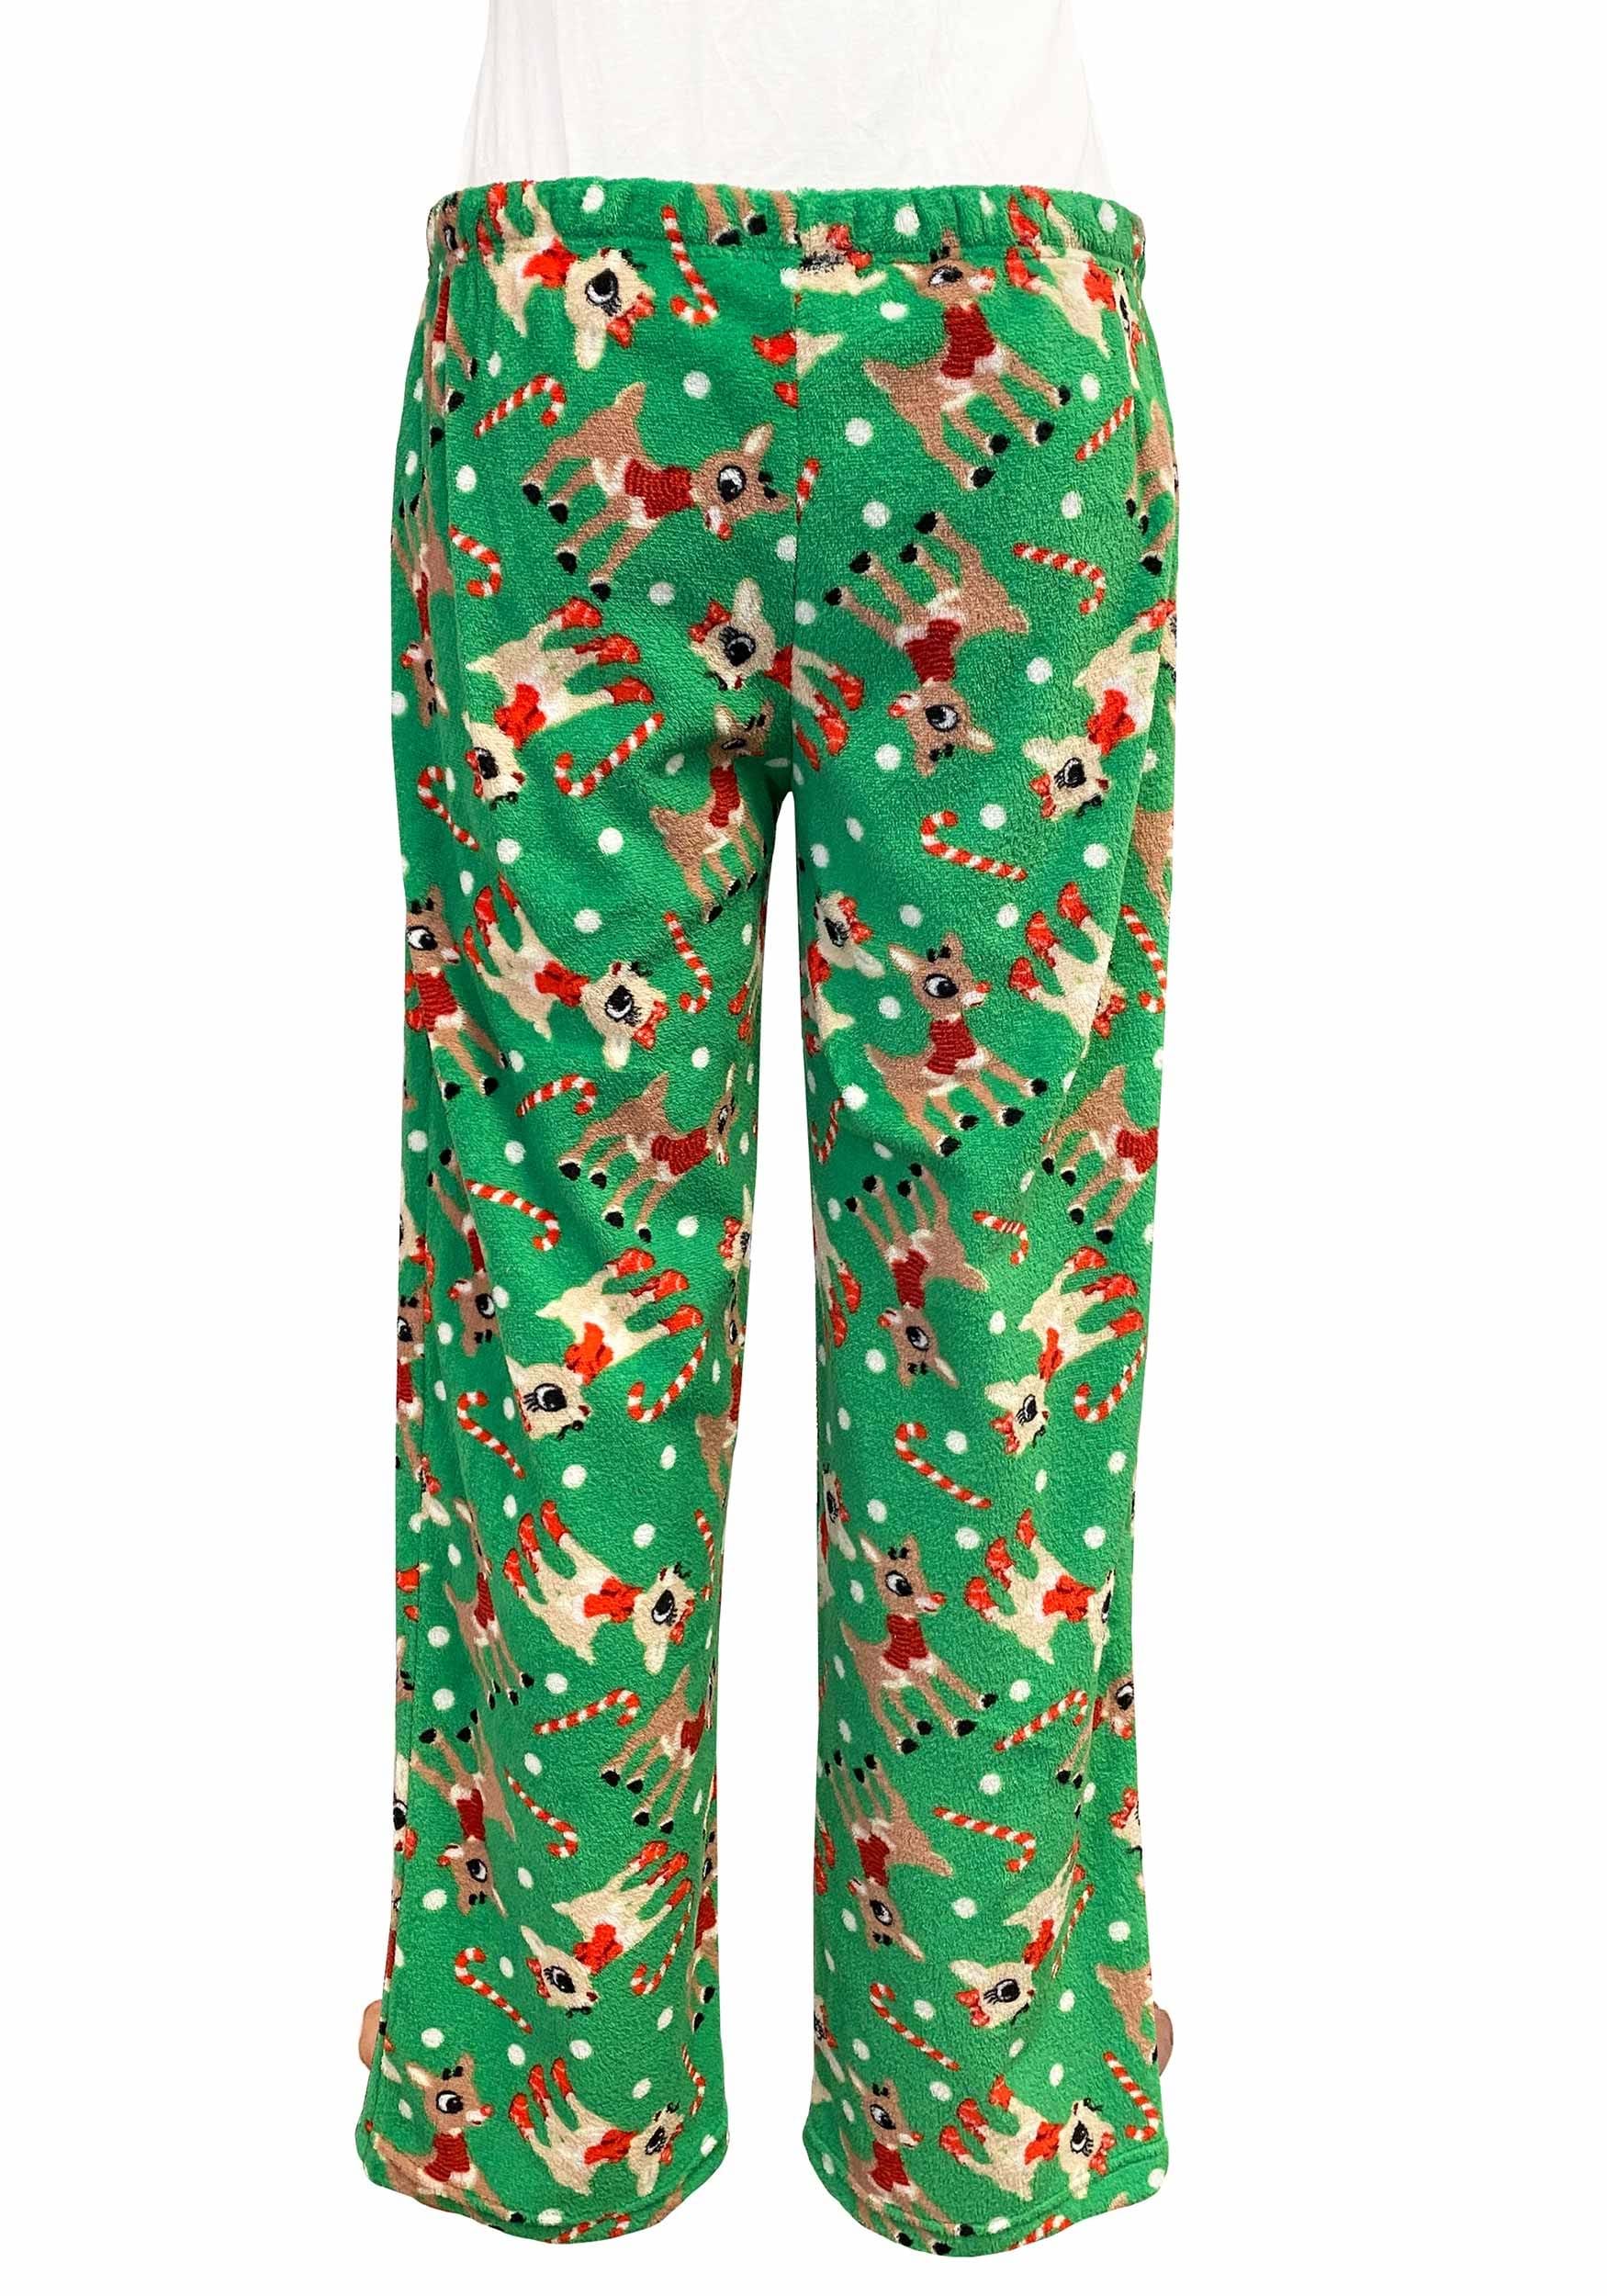 Rudolph Red-Nosed Reindeer Men's Pajama Pants L White Green Black